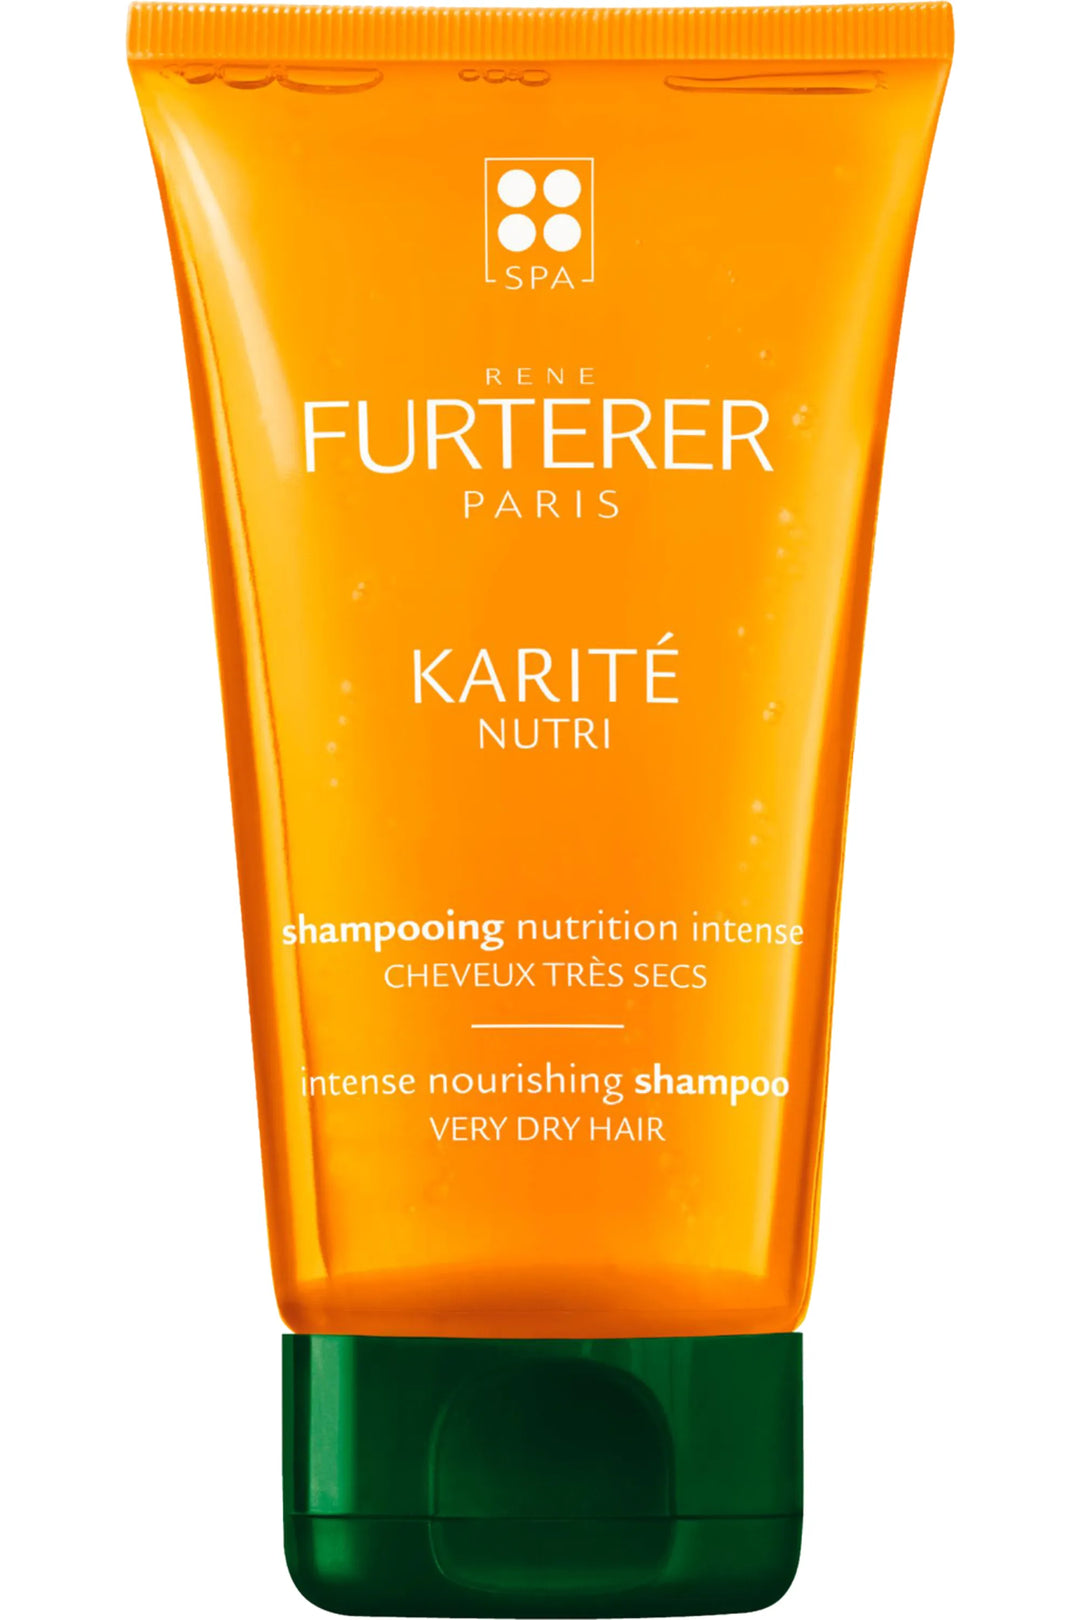 Karité Nutri Intense Nourishing Shampoo